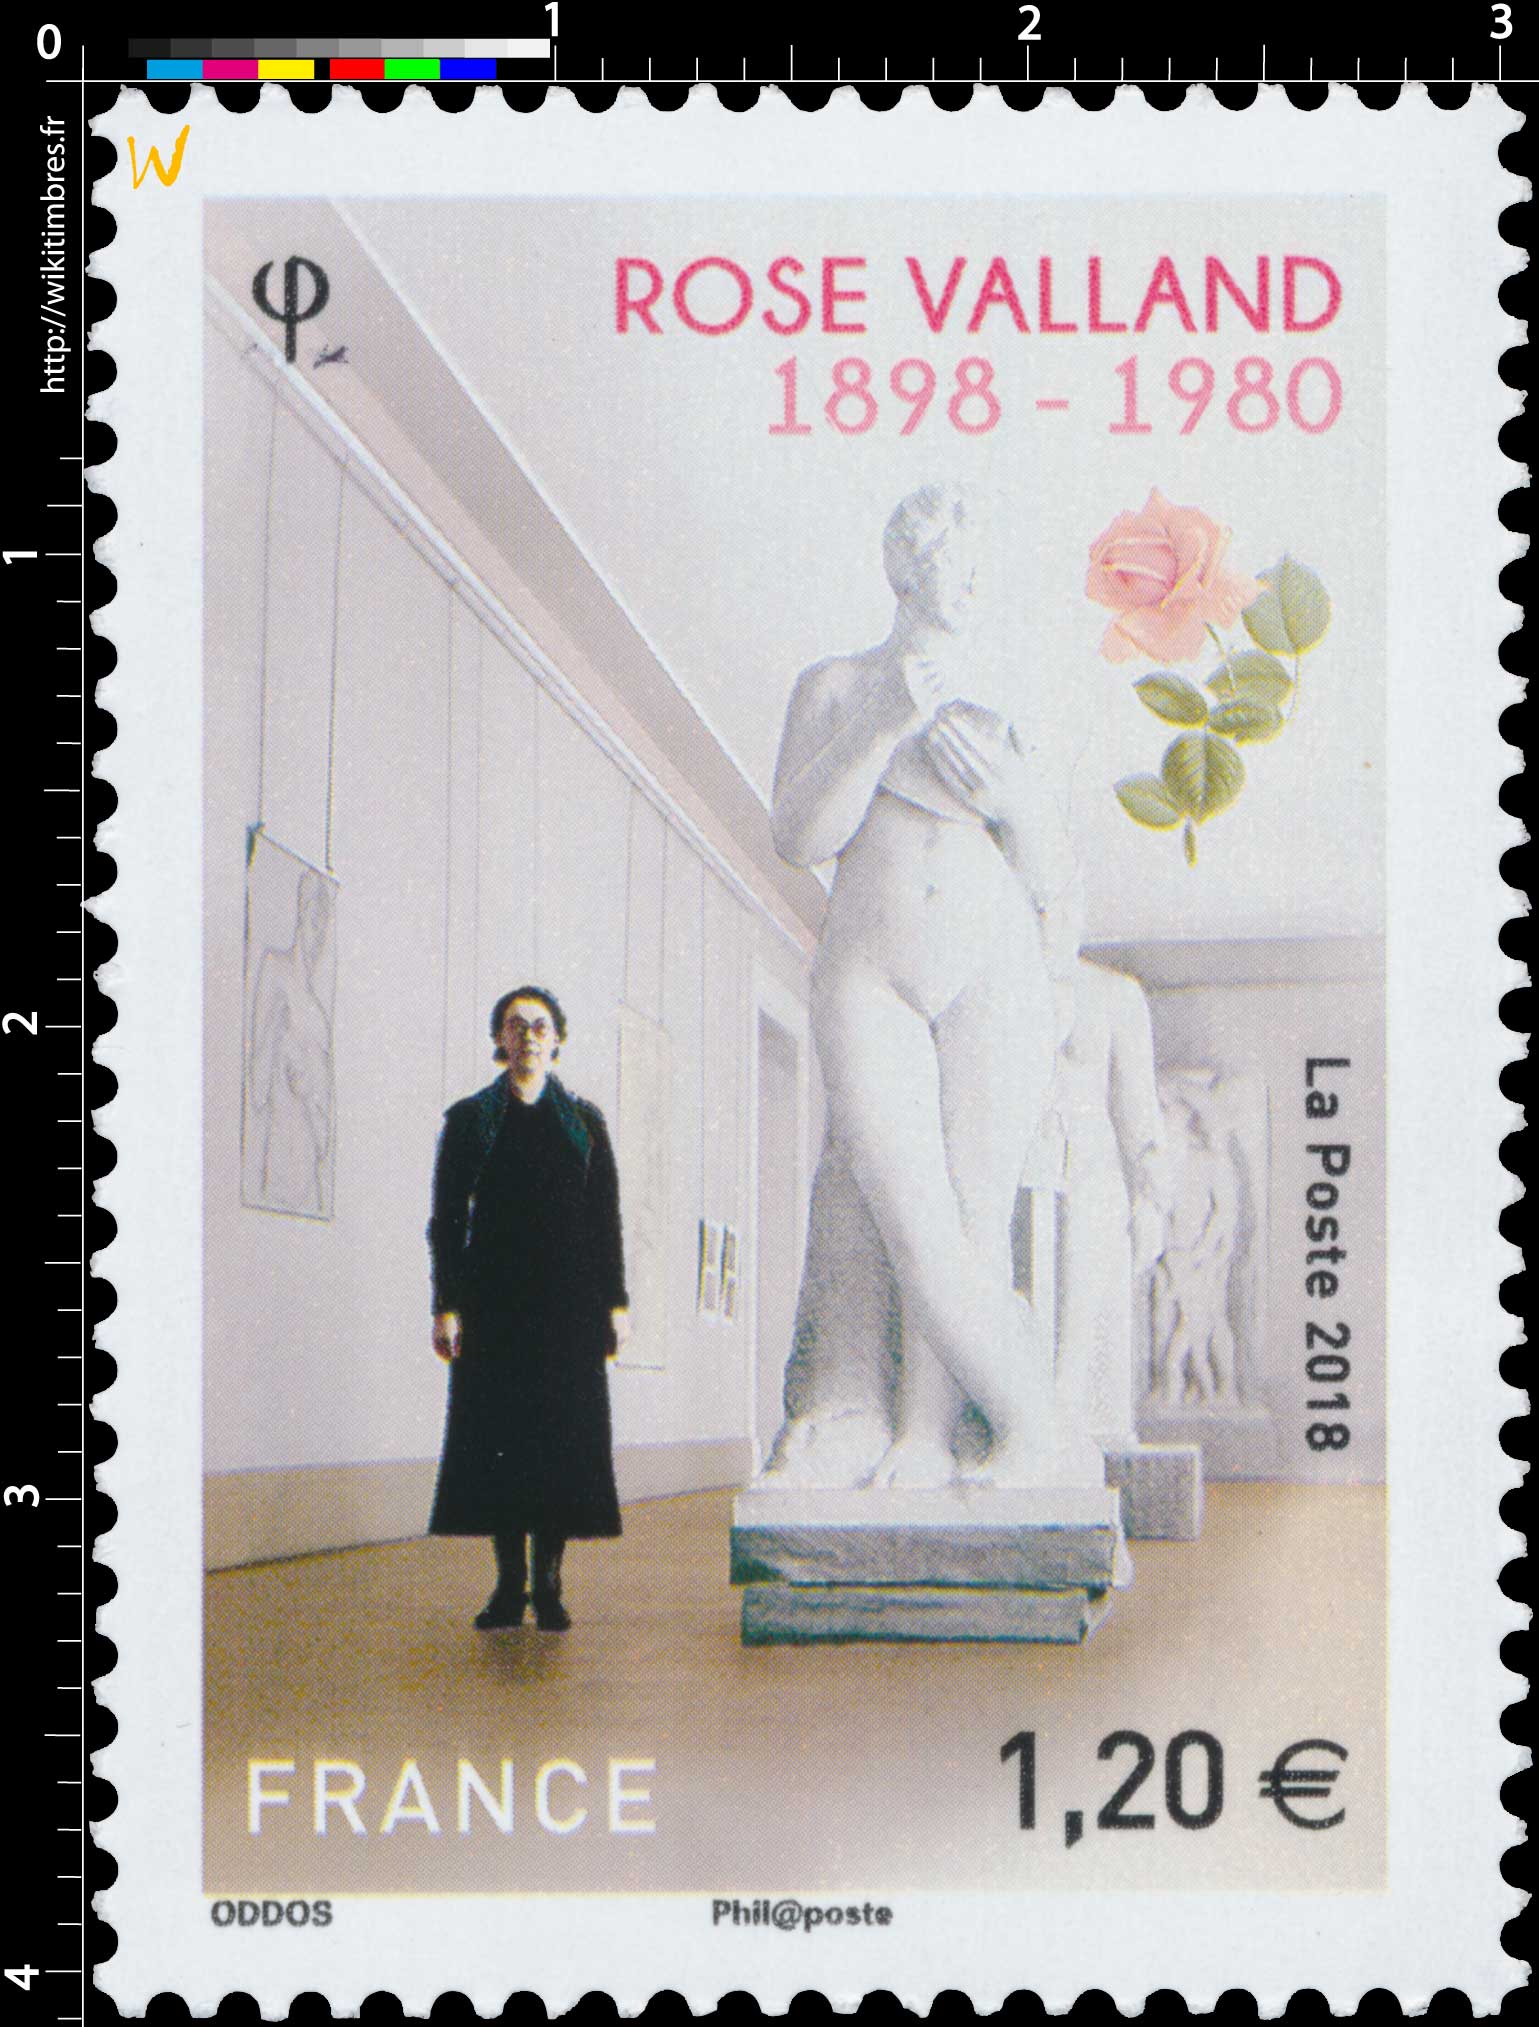 2018 Rose Valland 1898 - 1980